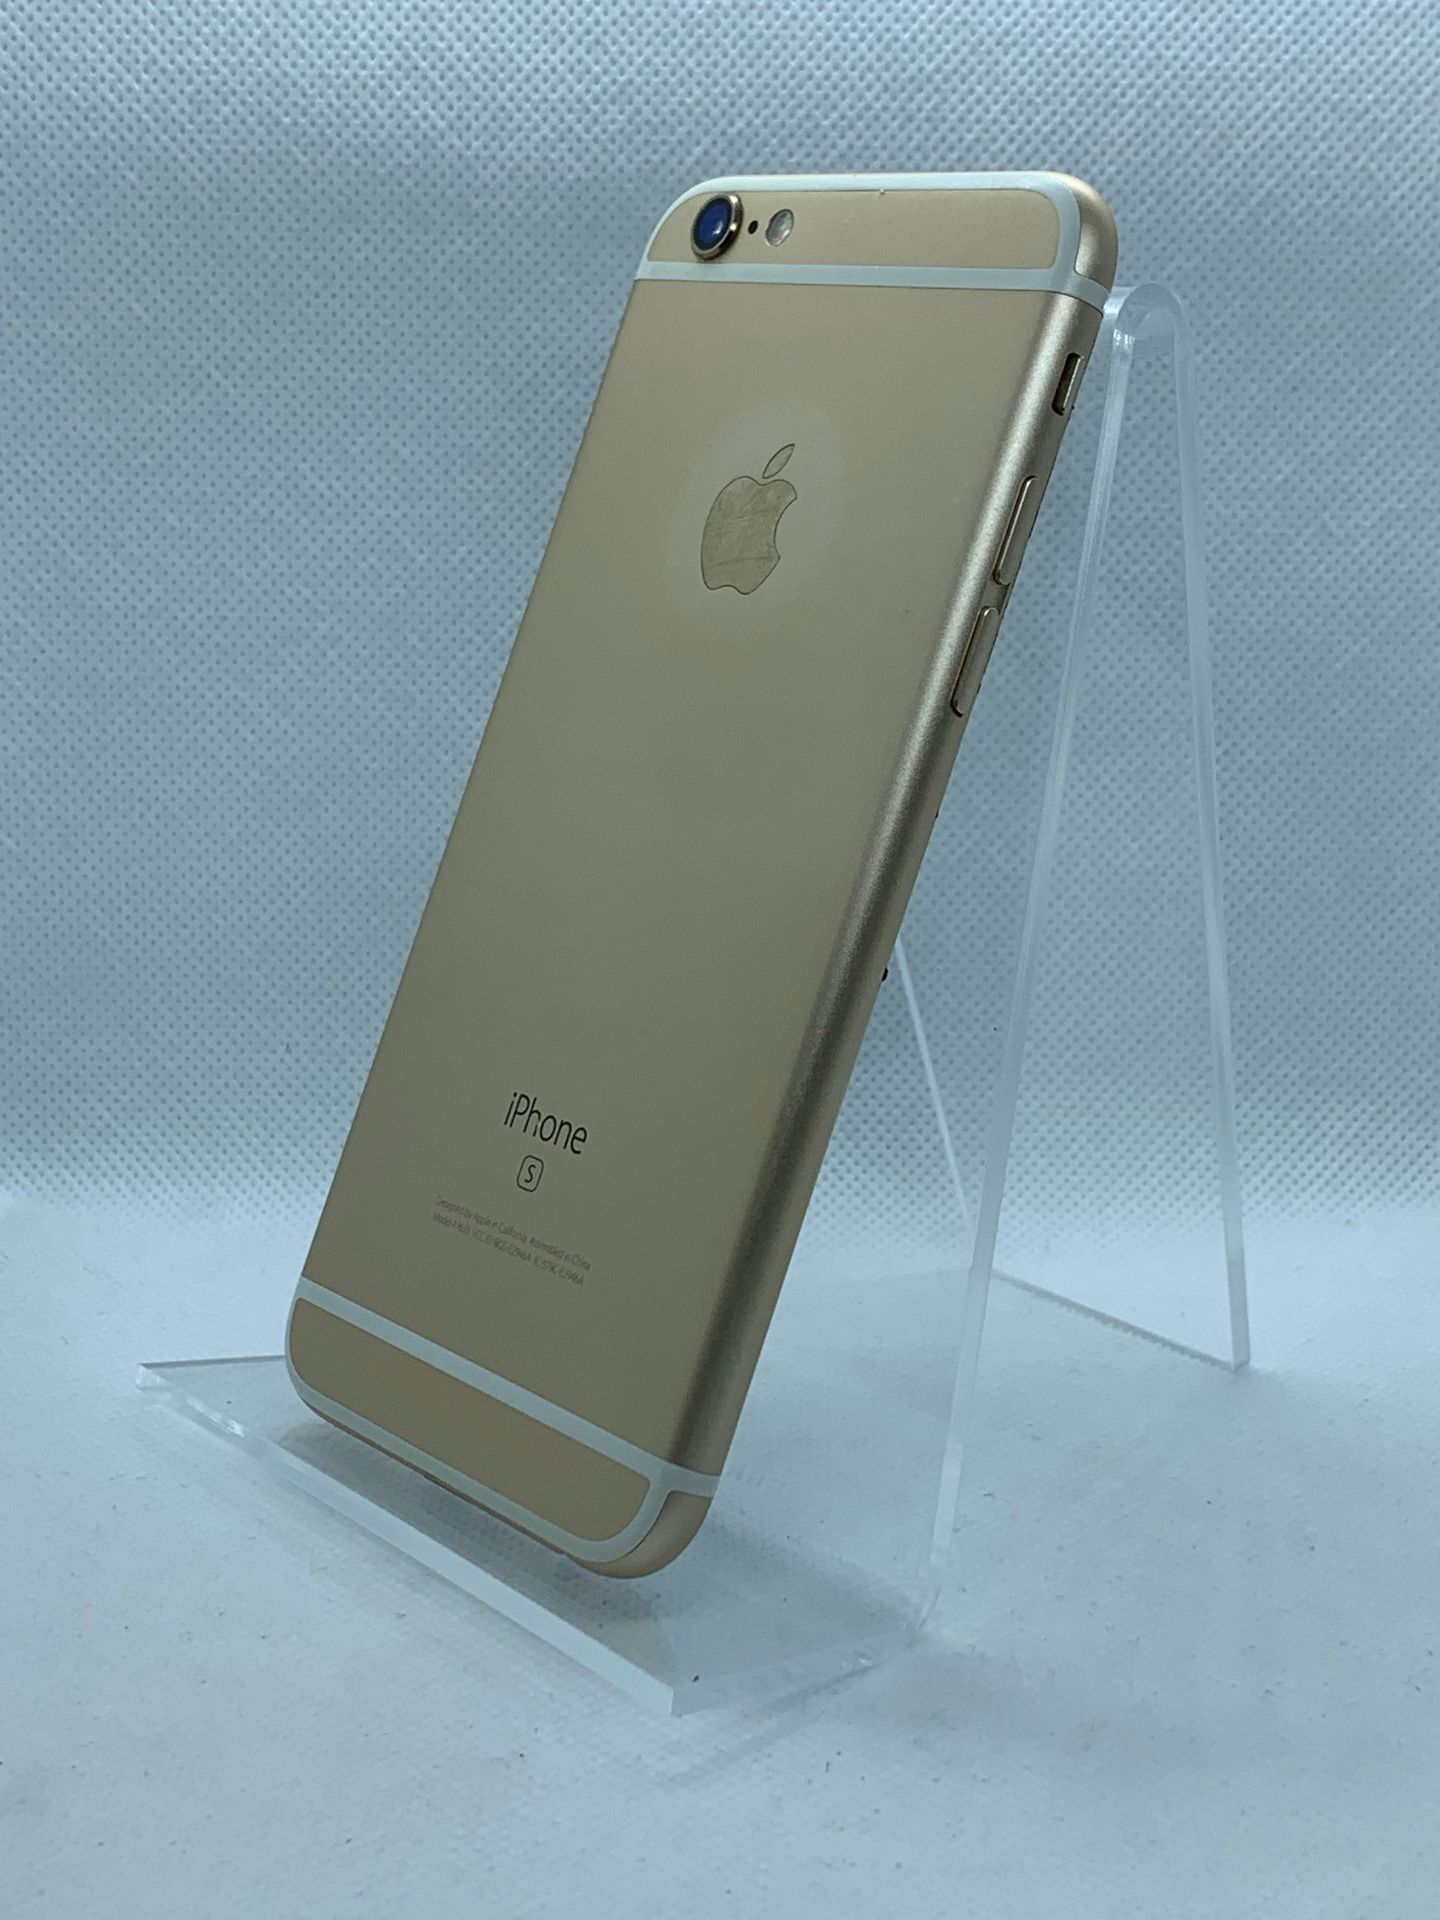 iPhone 6s 32GB Gold Factory Unlocked 